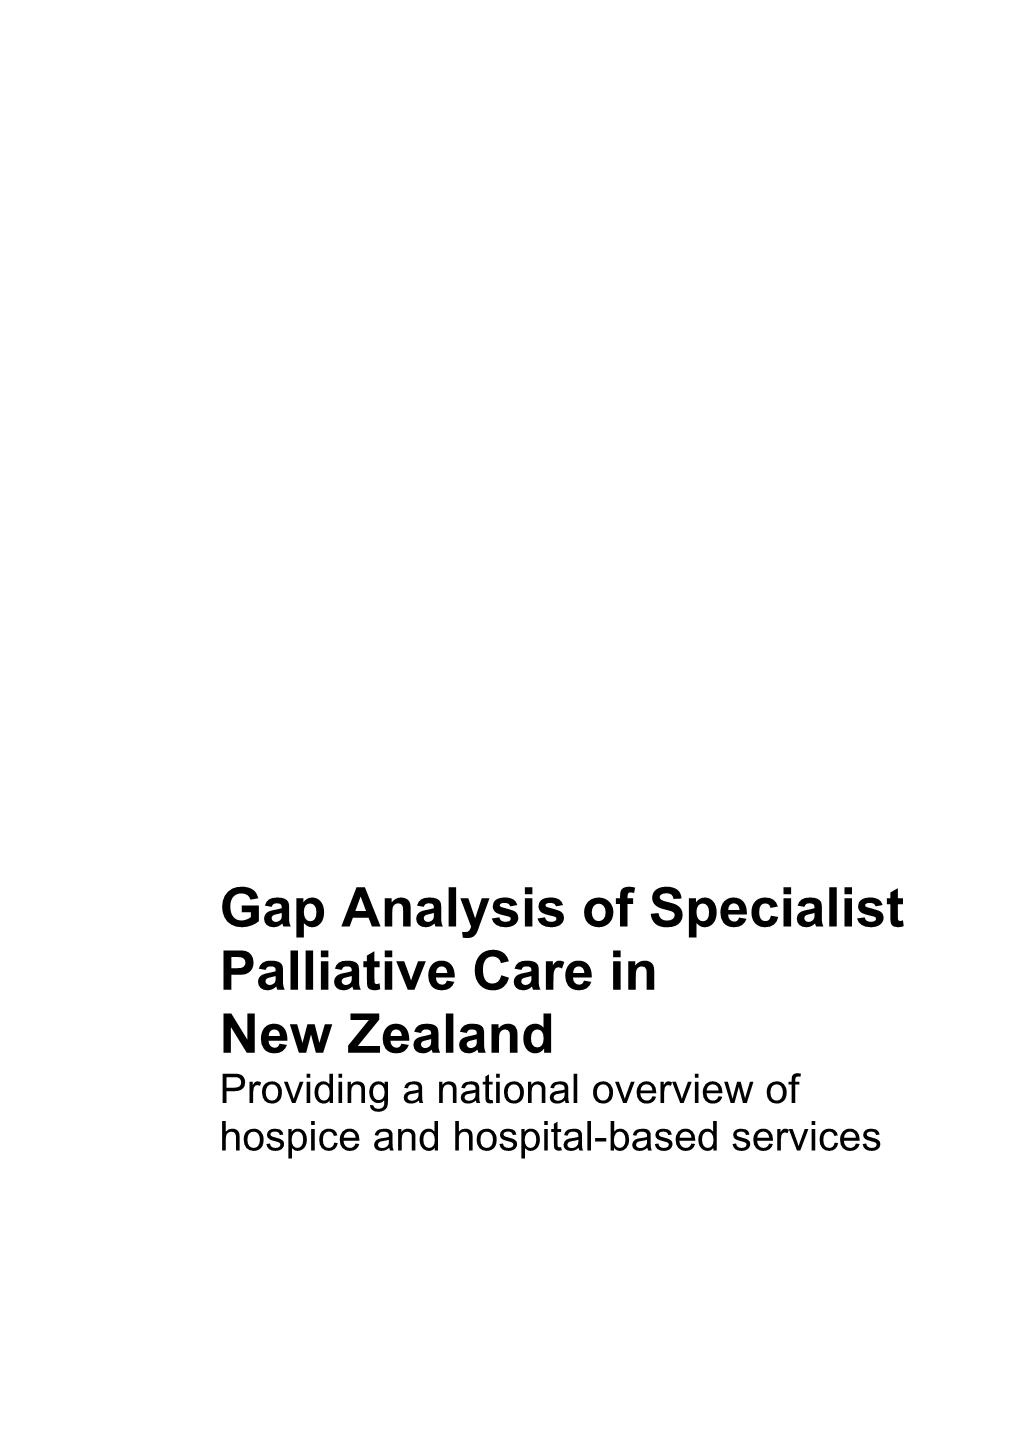 Gap Analysis of Specialist Palliative Care in Newzealand